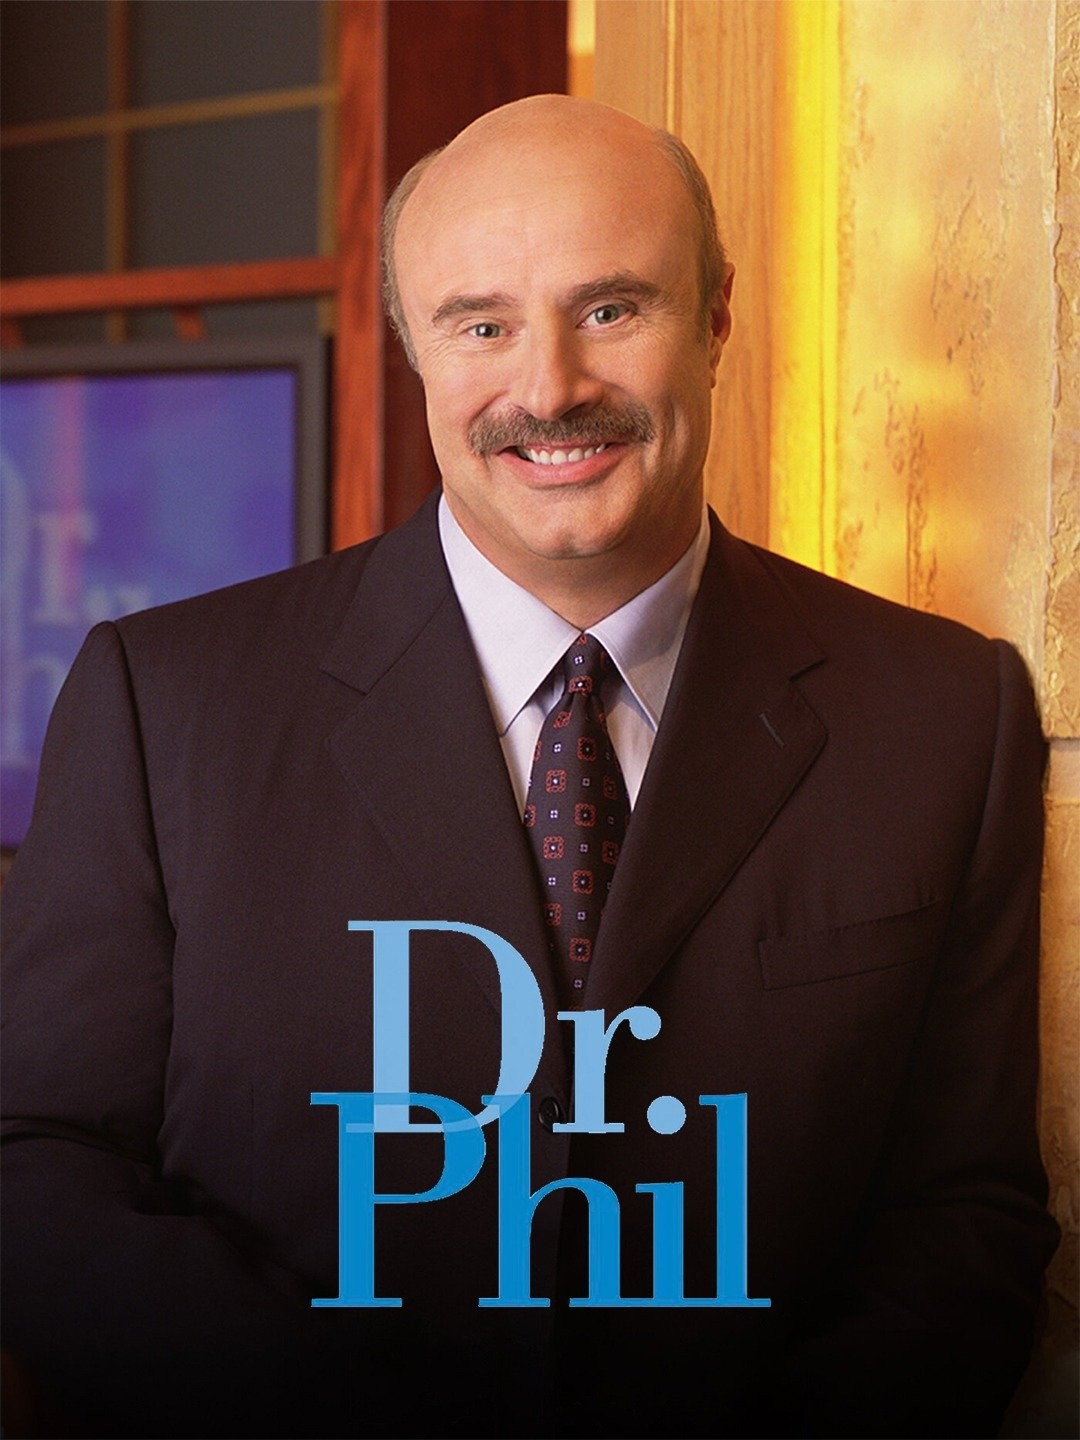 dr phil